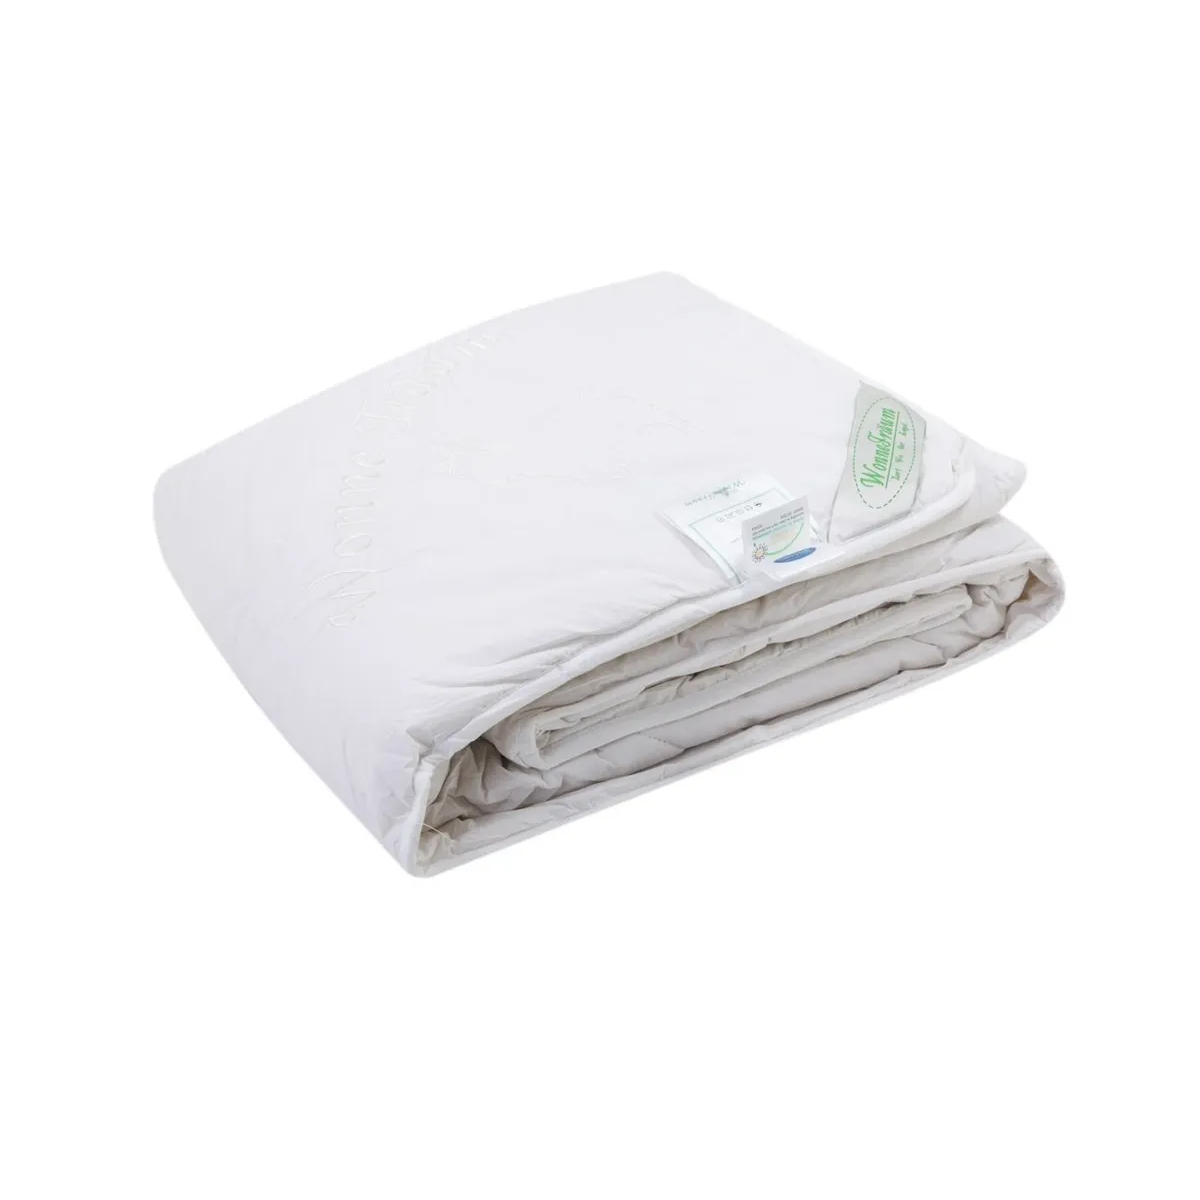 Одеяло кашемировое Wonne Traum белое 200х220 см (2709-136712) одеяло wonne traum down like 150х210 см